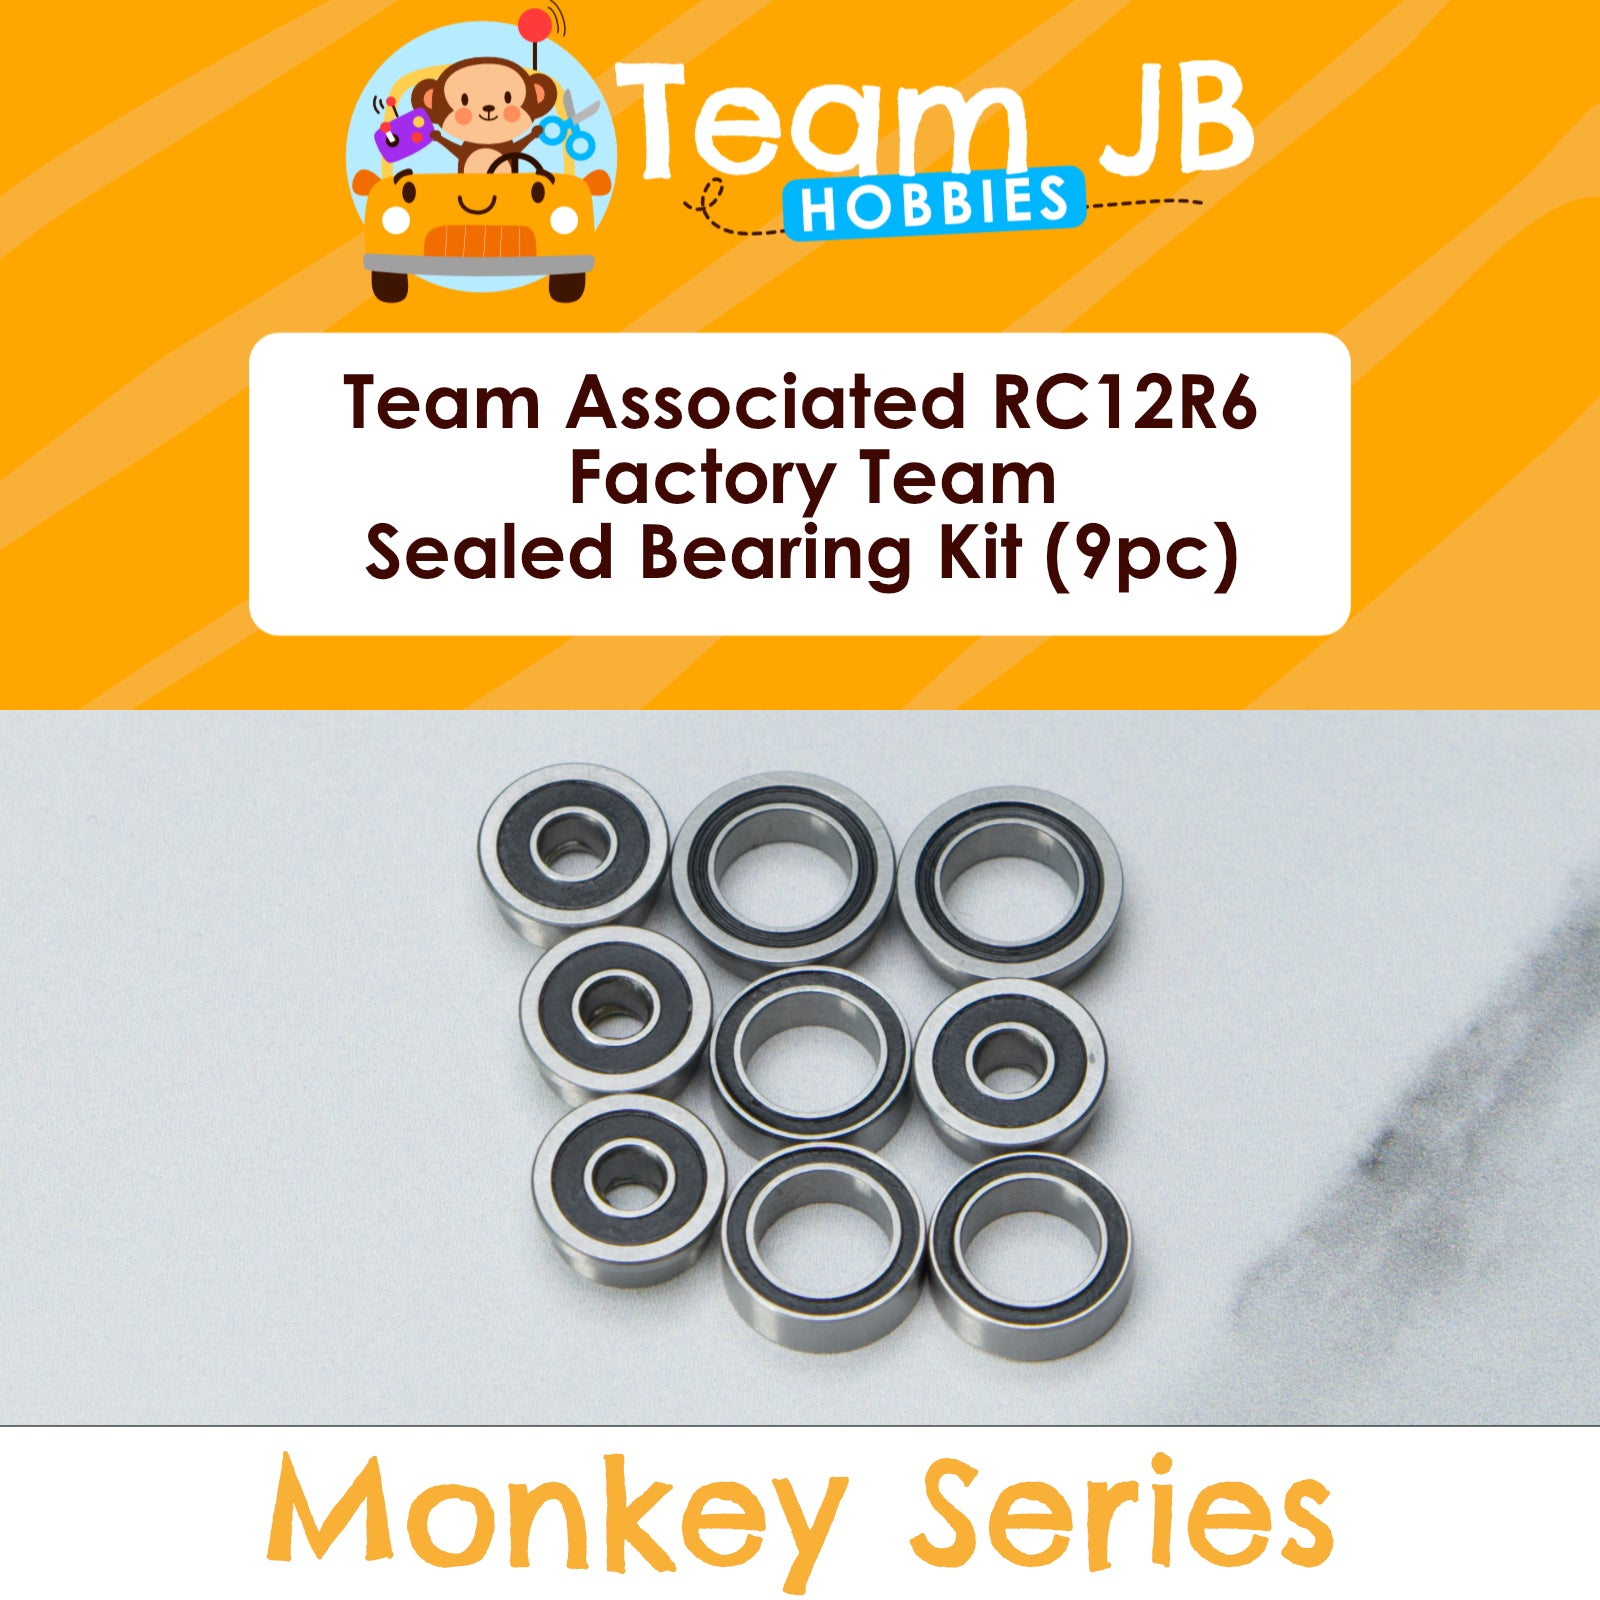 Team Associated RC12R6 Factory Team - Sealed Bearing Kit